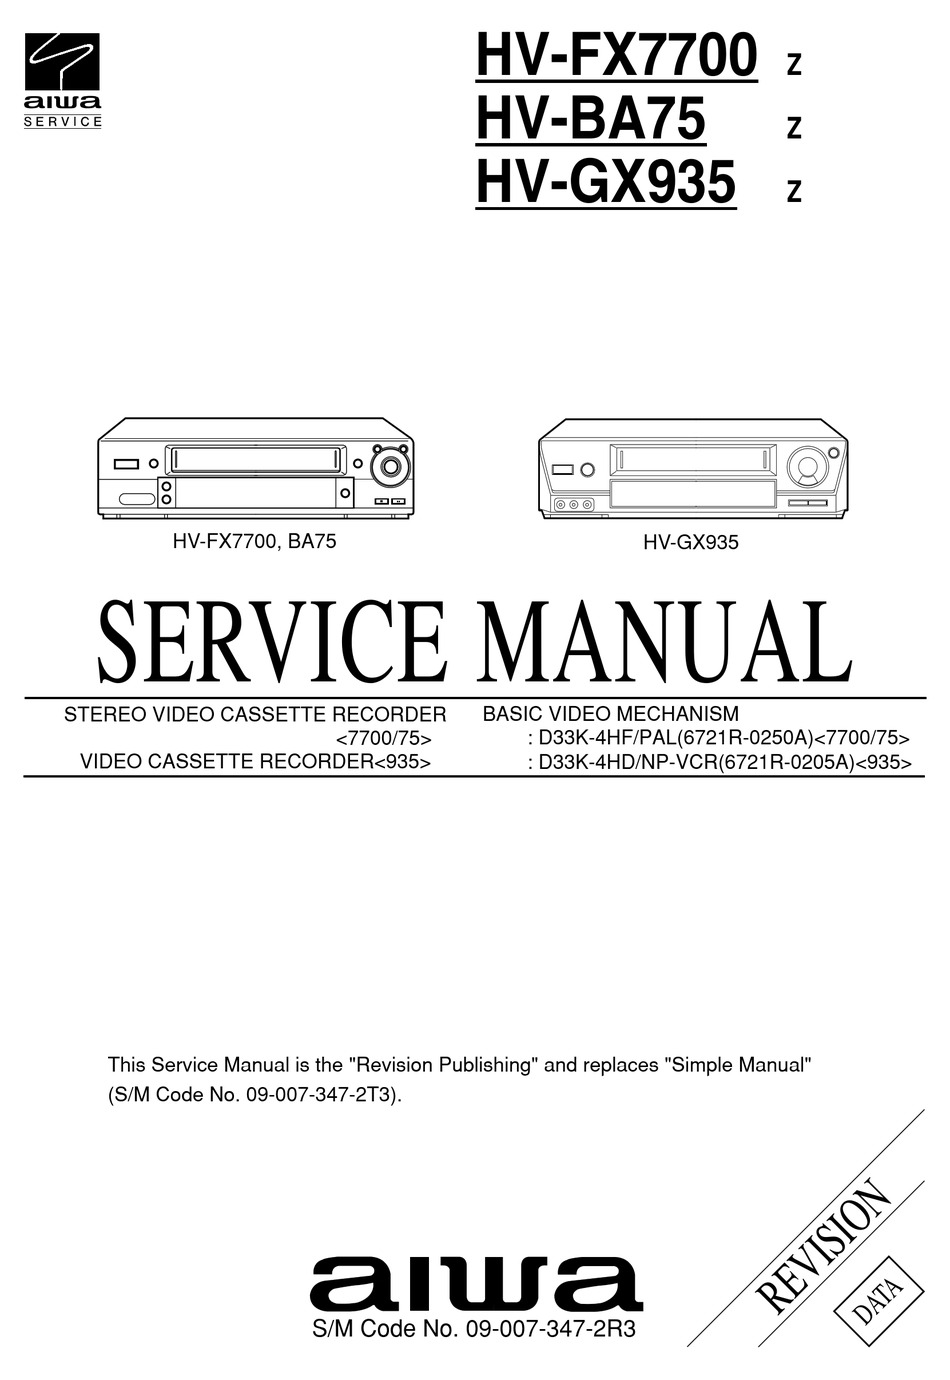 AIWA HV-FX7700 SERVICE MANUAL Pdf Download | ManualsLib